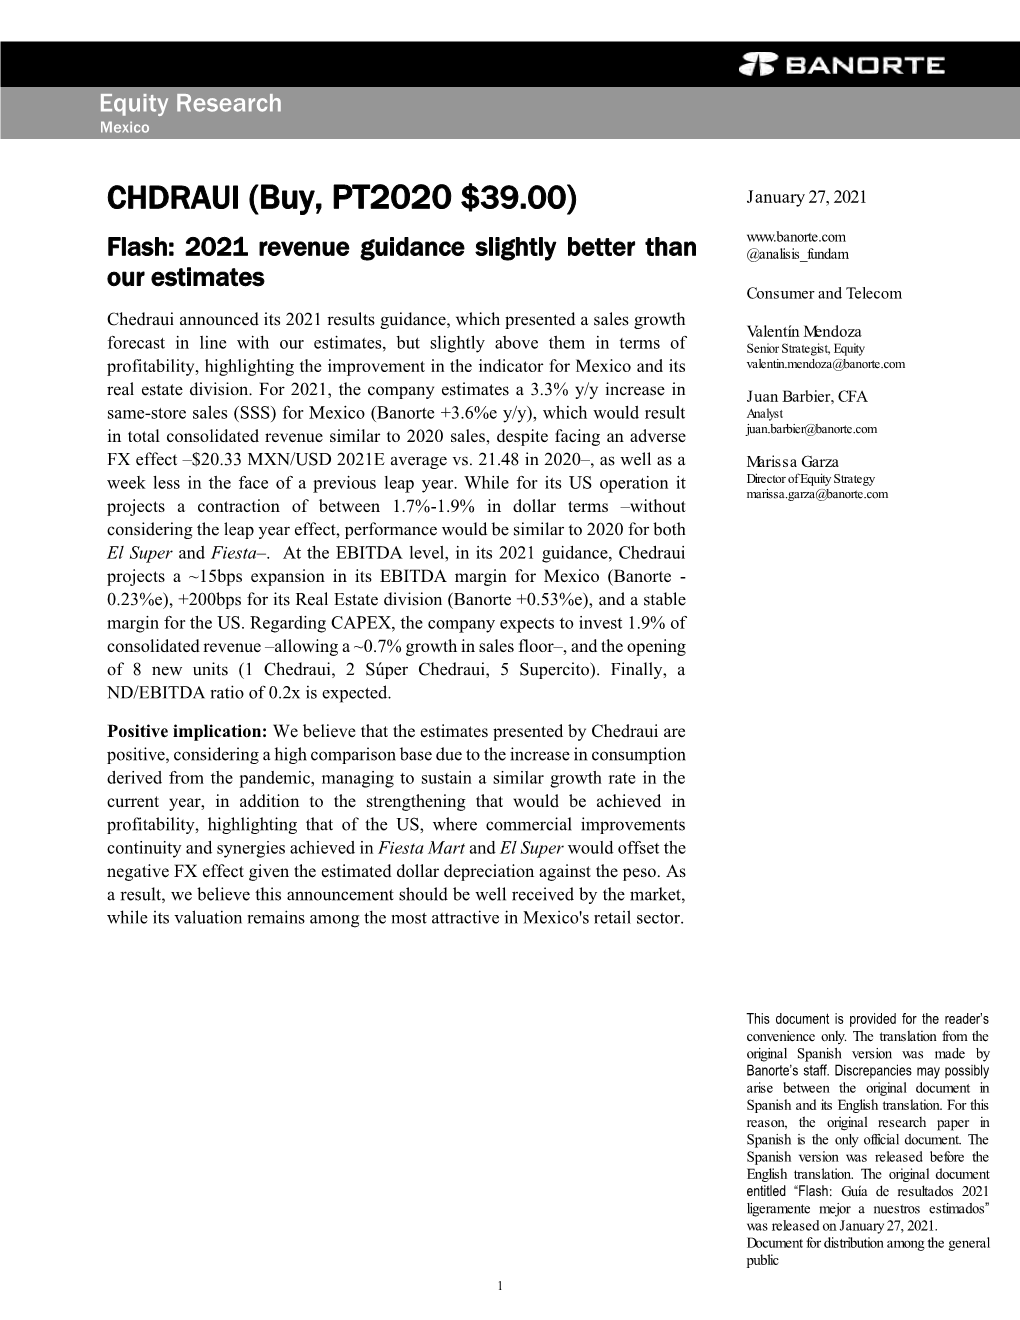 CHDRAUI (Buy, PT2020 $39.00) January 27, 2021